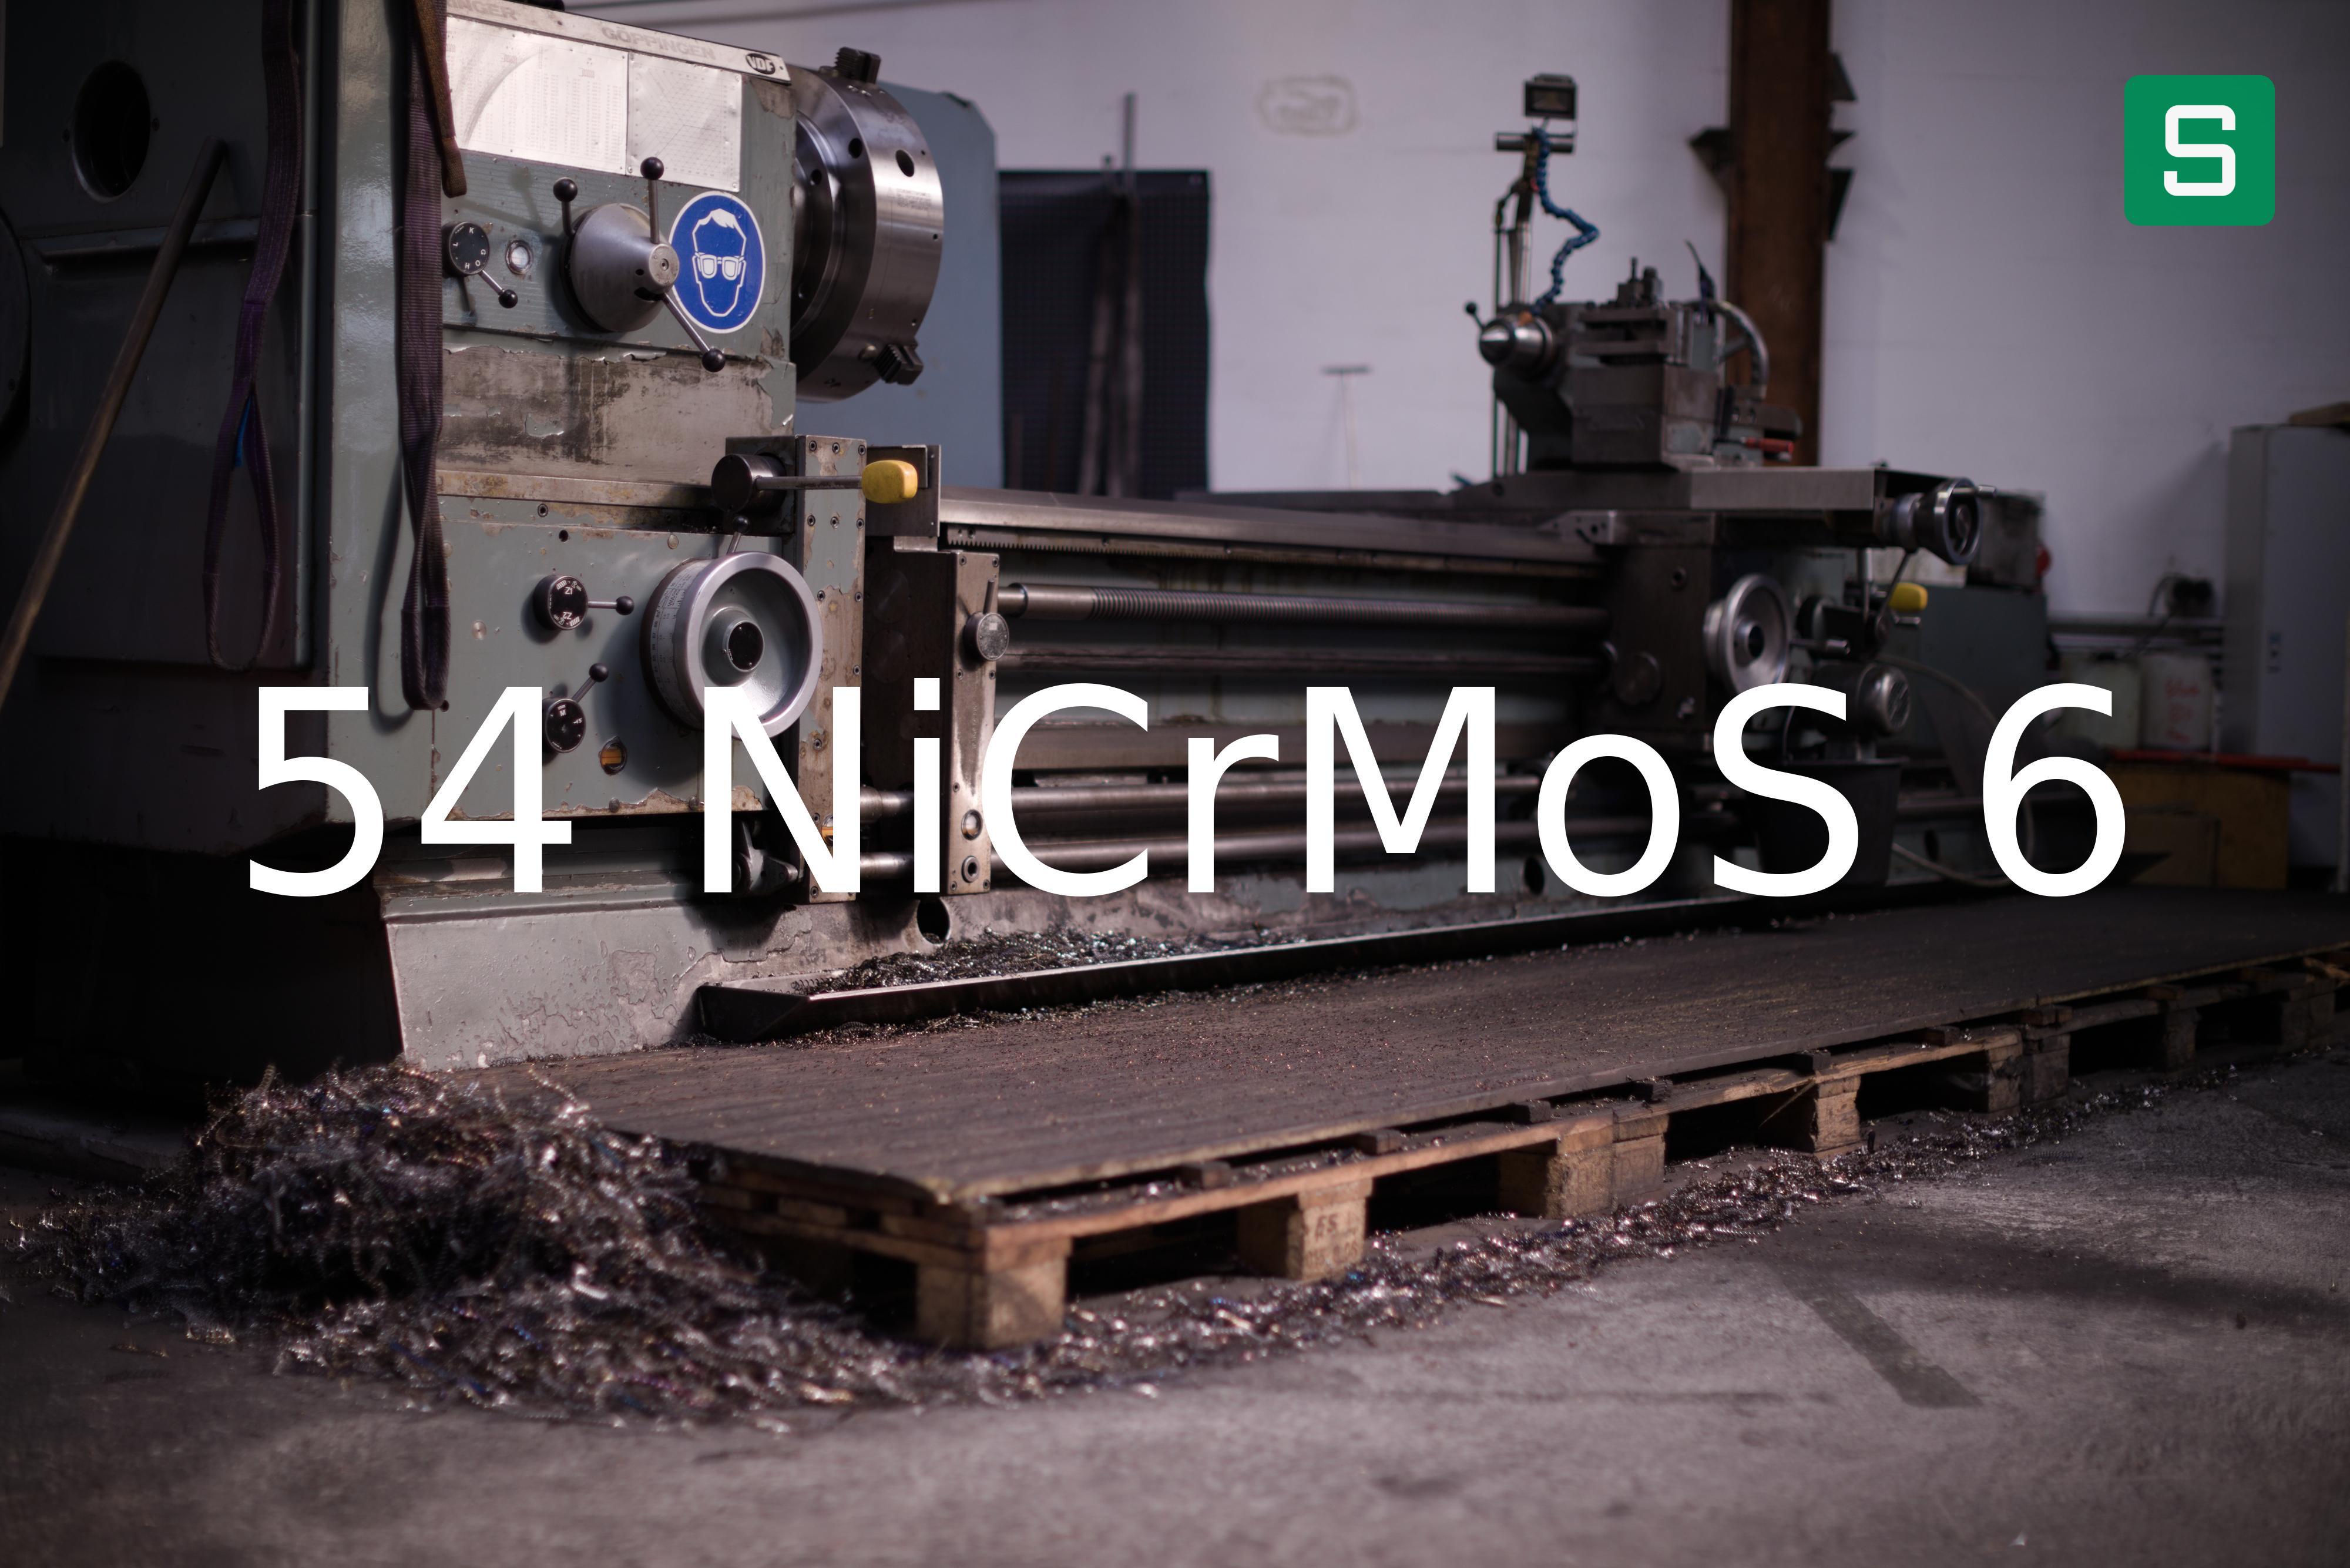 Steel Material: 54 NiCrMoS 6